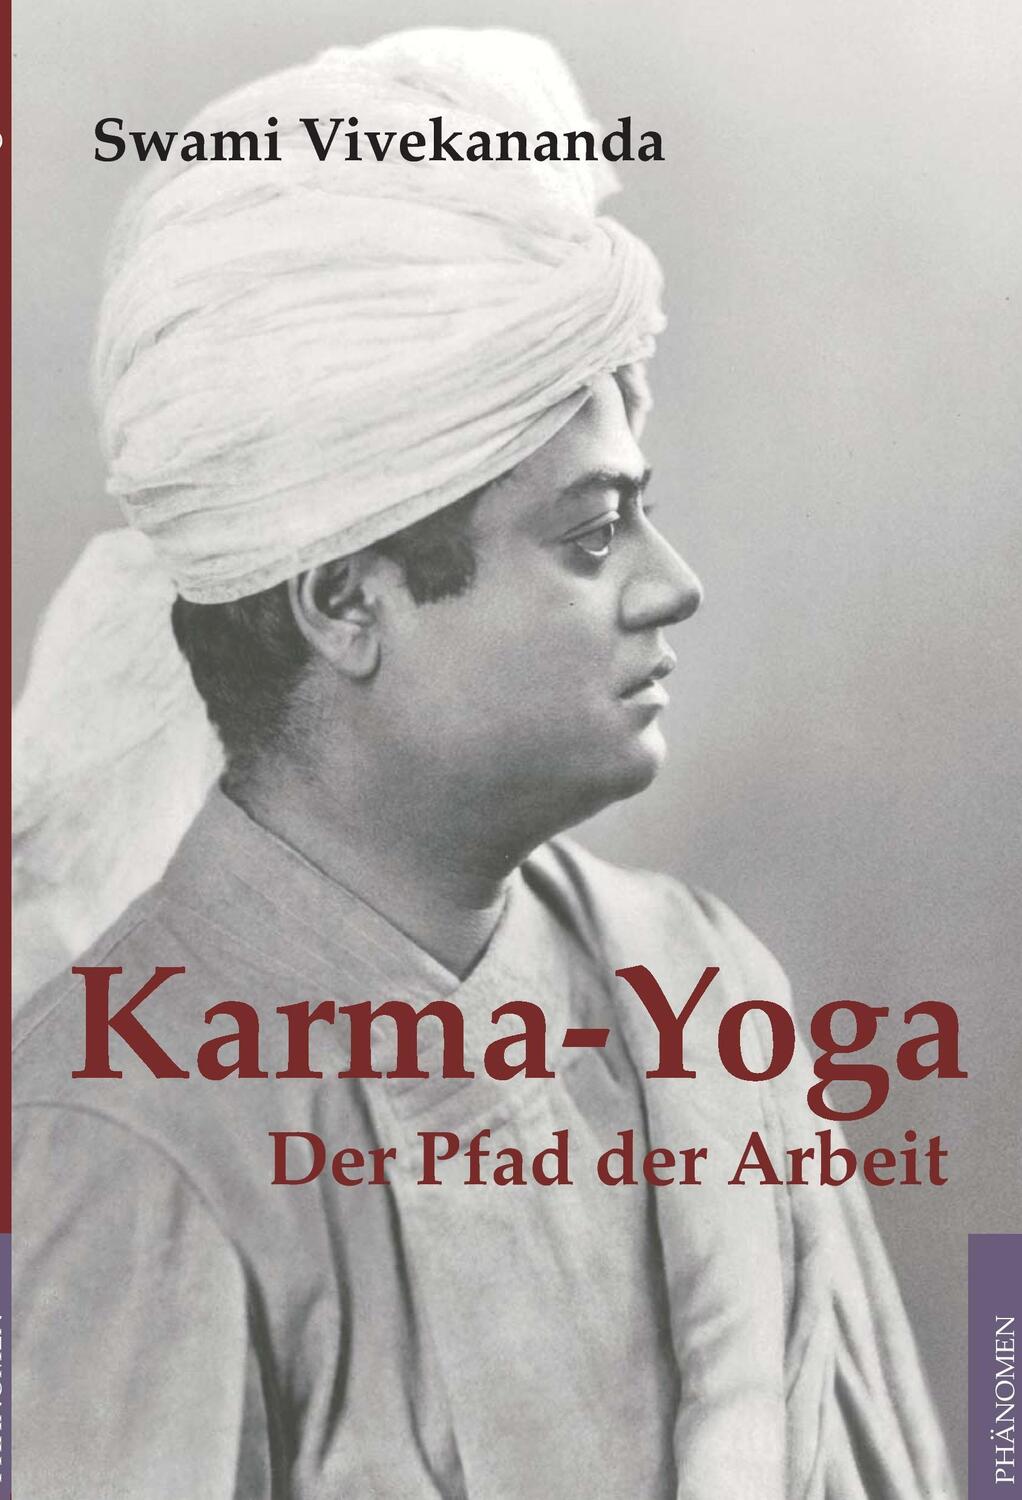 Karma-Yoga - Vivekananda, Swami